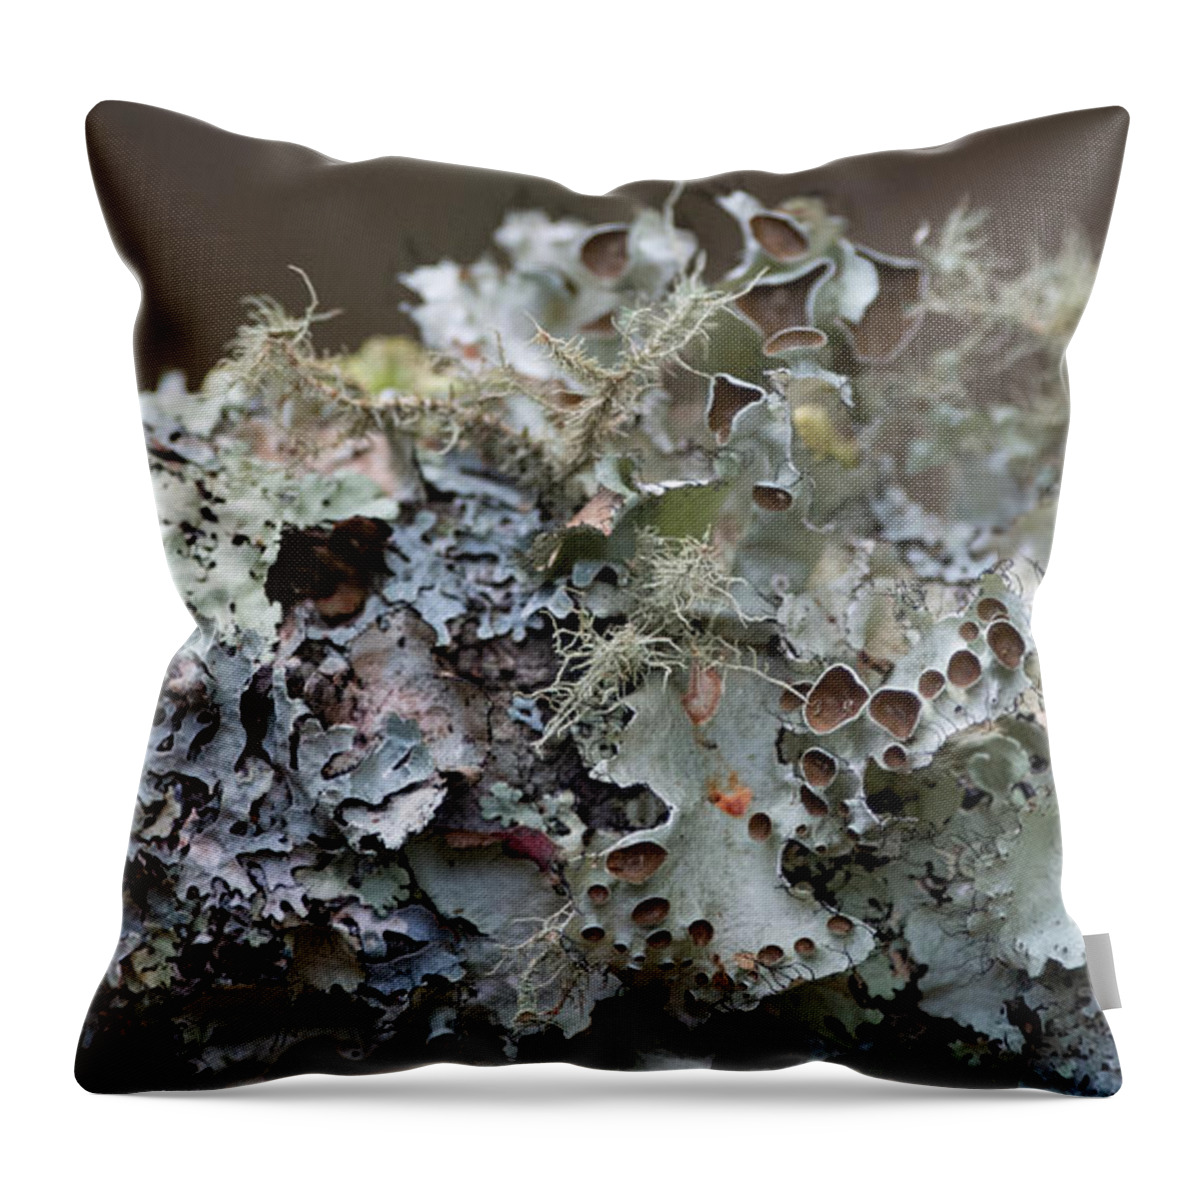 Lichen Throw Pillow featuring the photograph Lichen Sampler by Linda Bonaccorsi